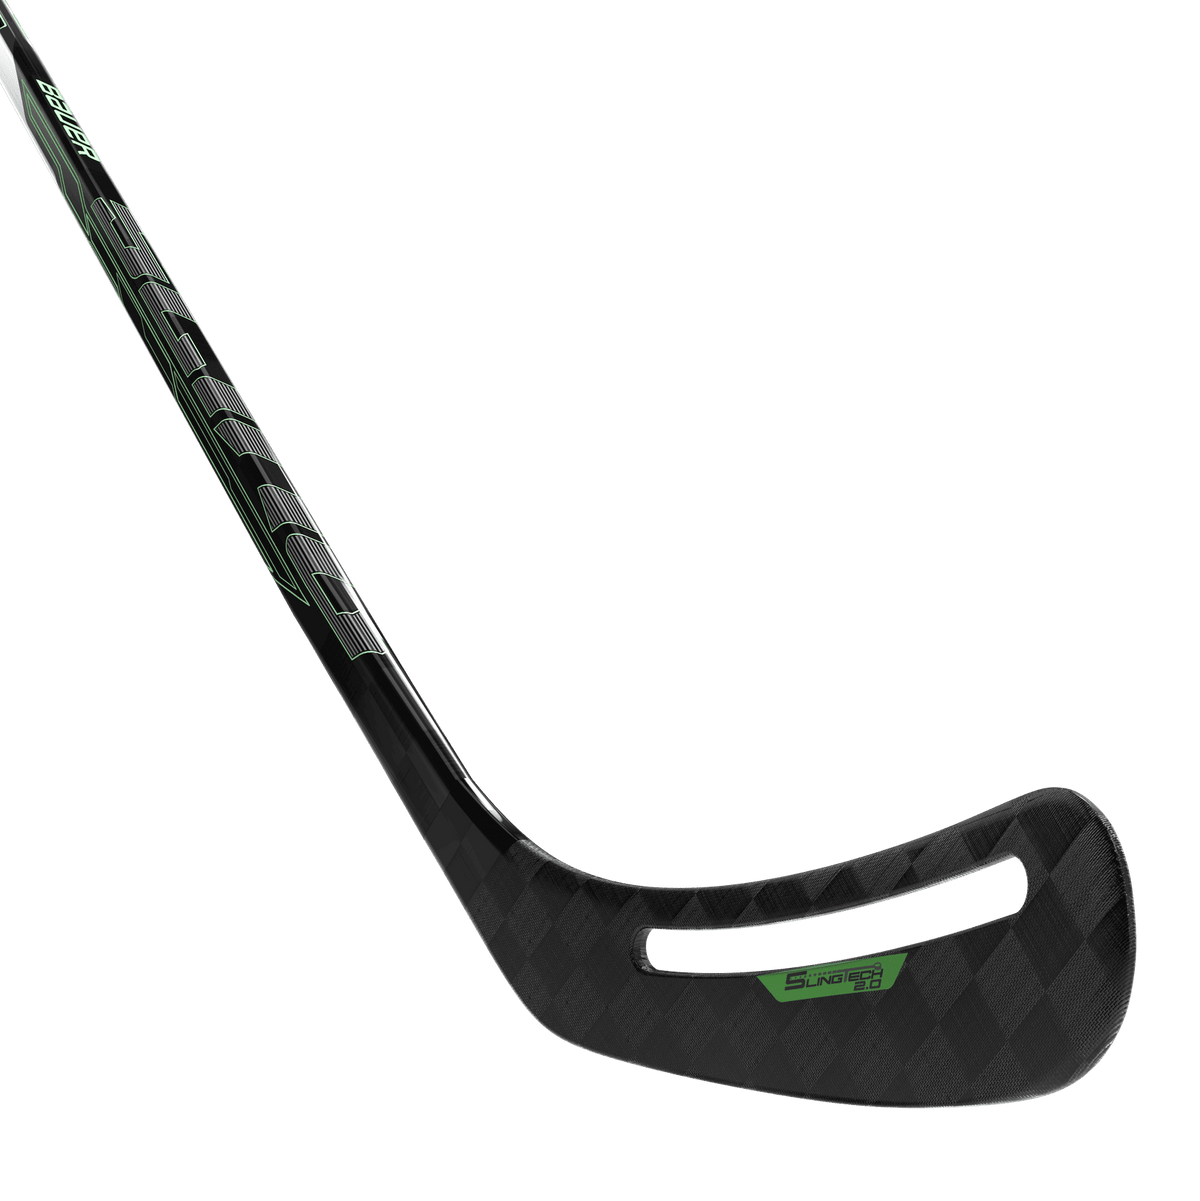 Bauer S21 Sling Grip Ice Hockey Stick Stick Snr